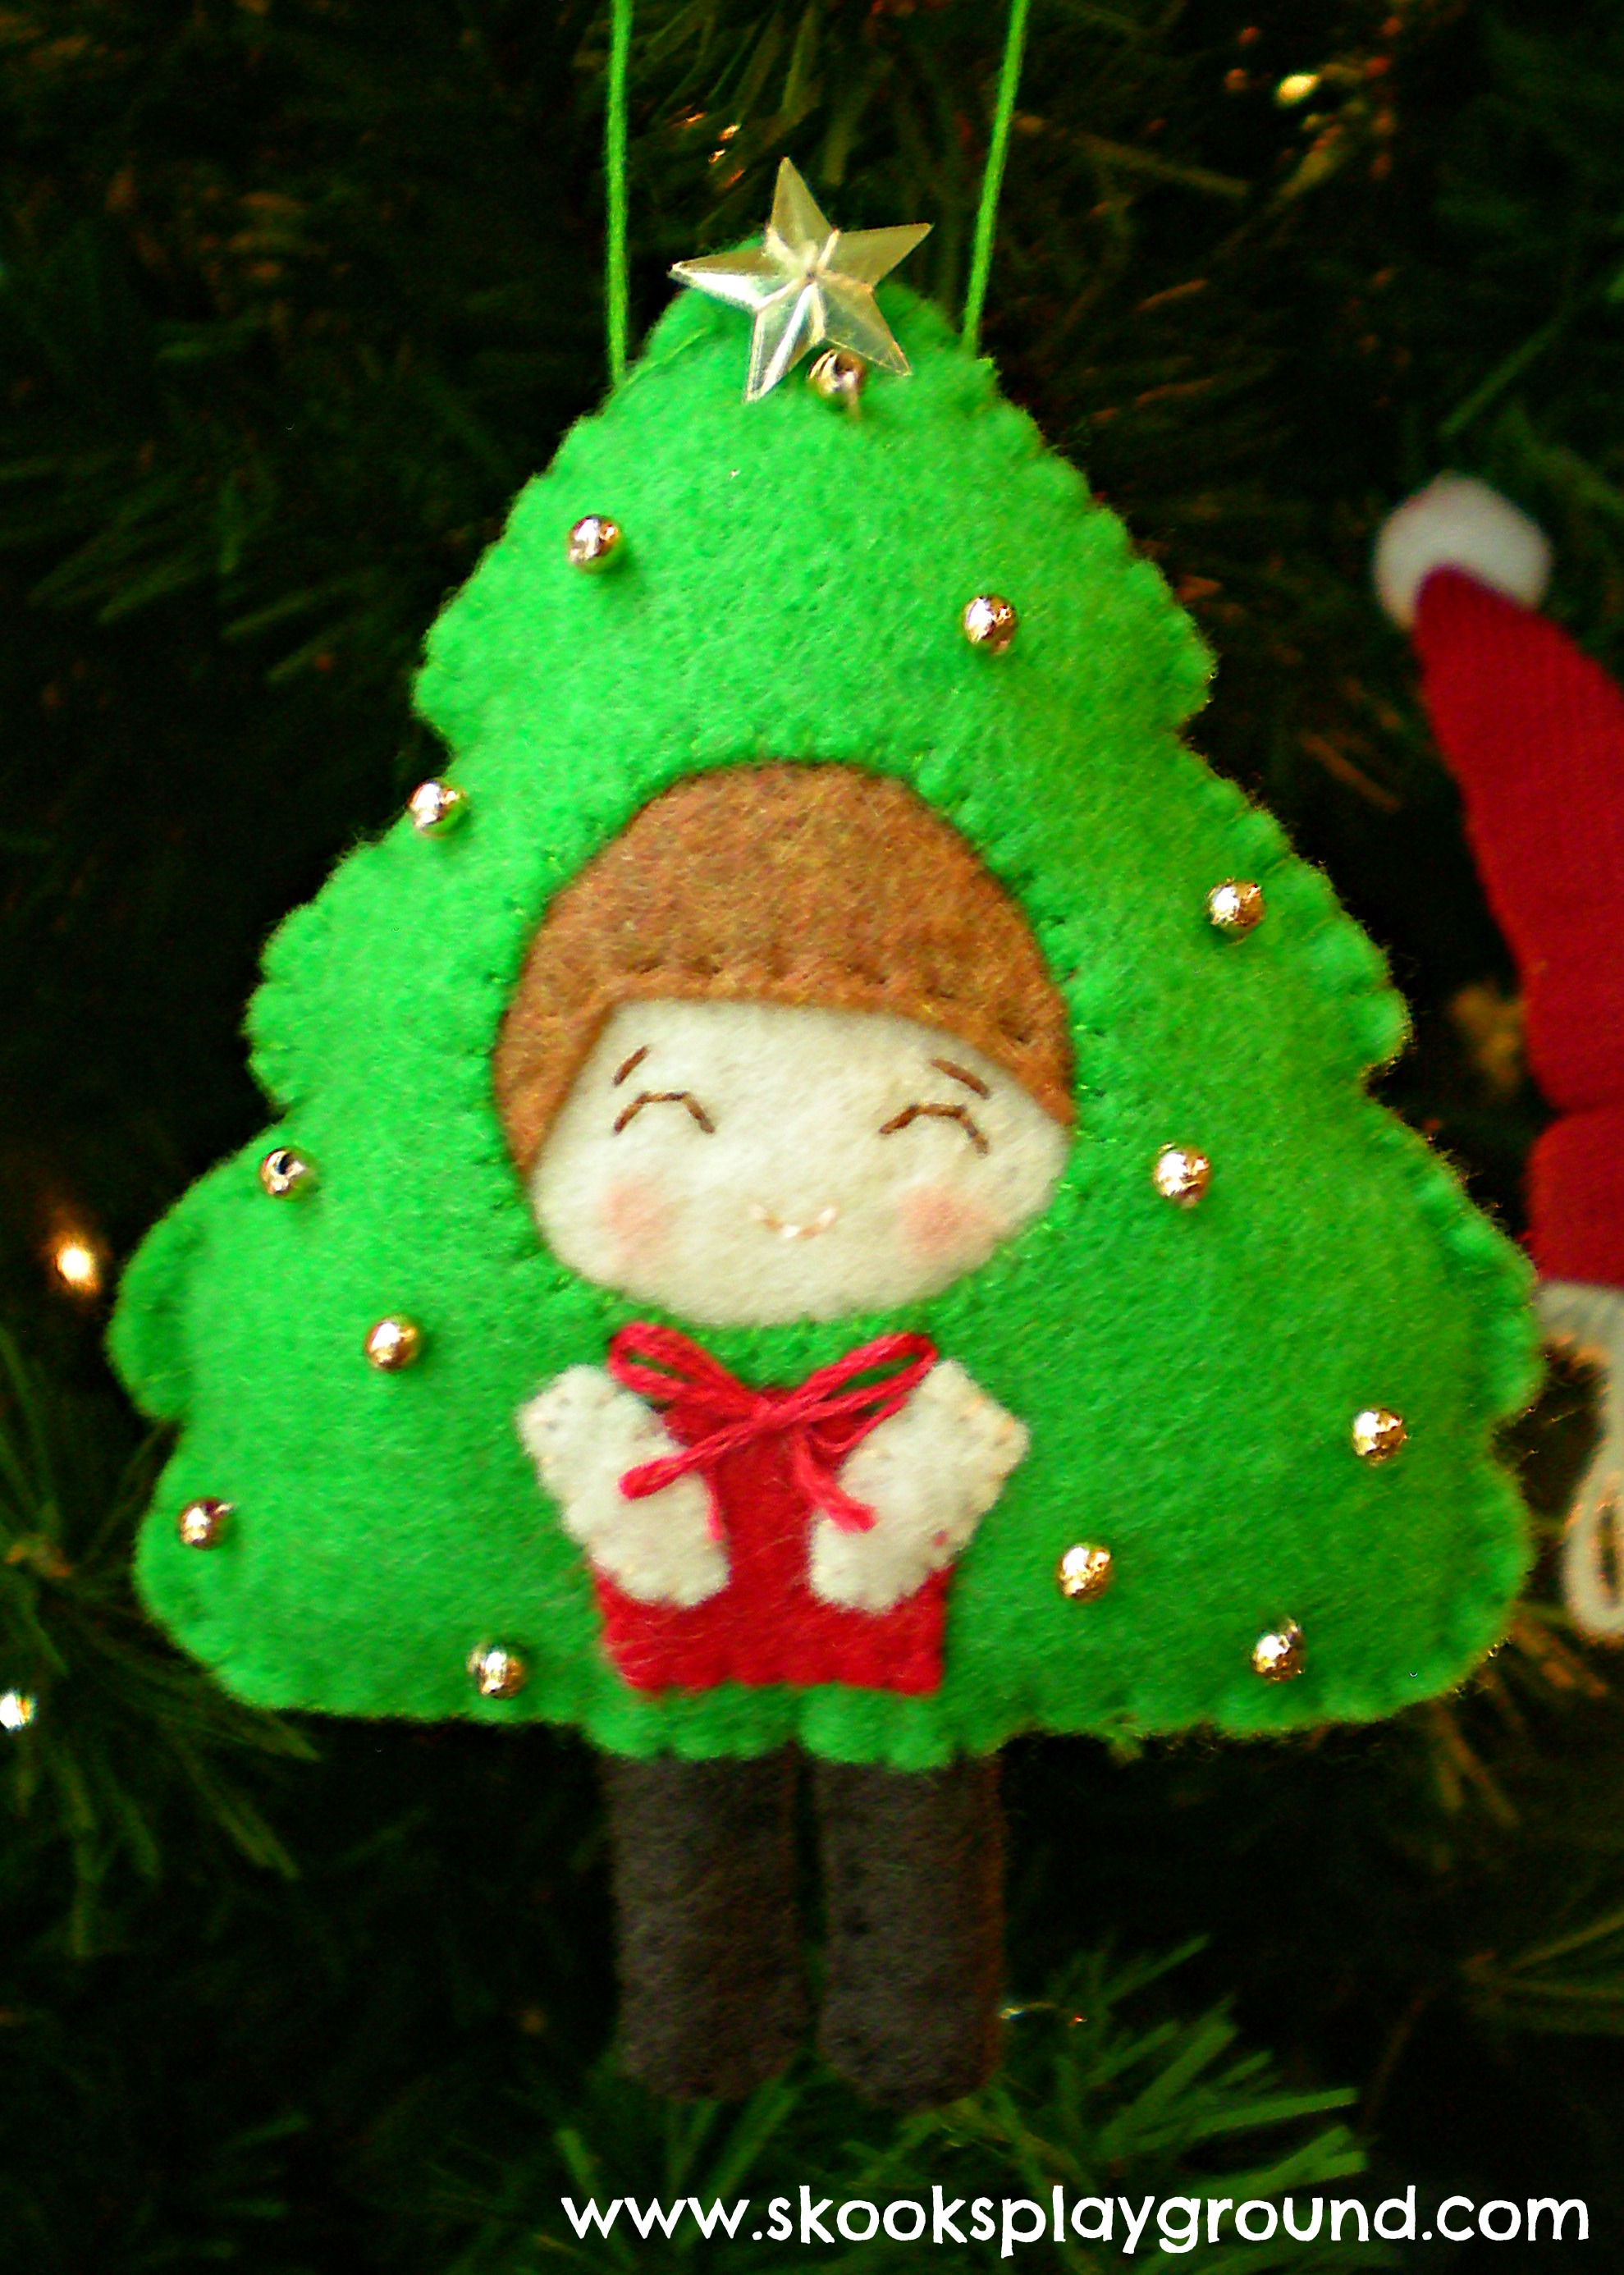 Little Tree Boy for Kee-ku 2012